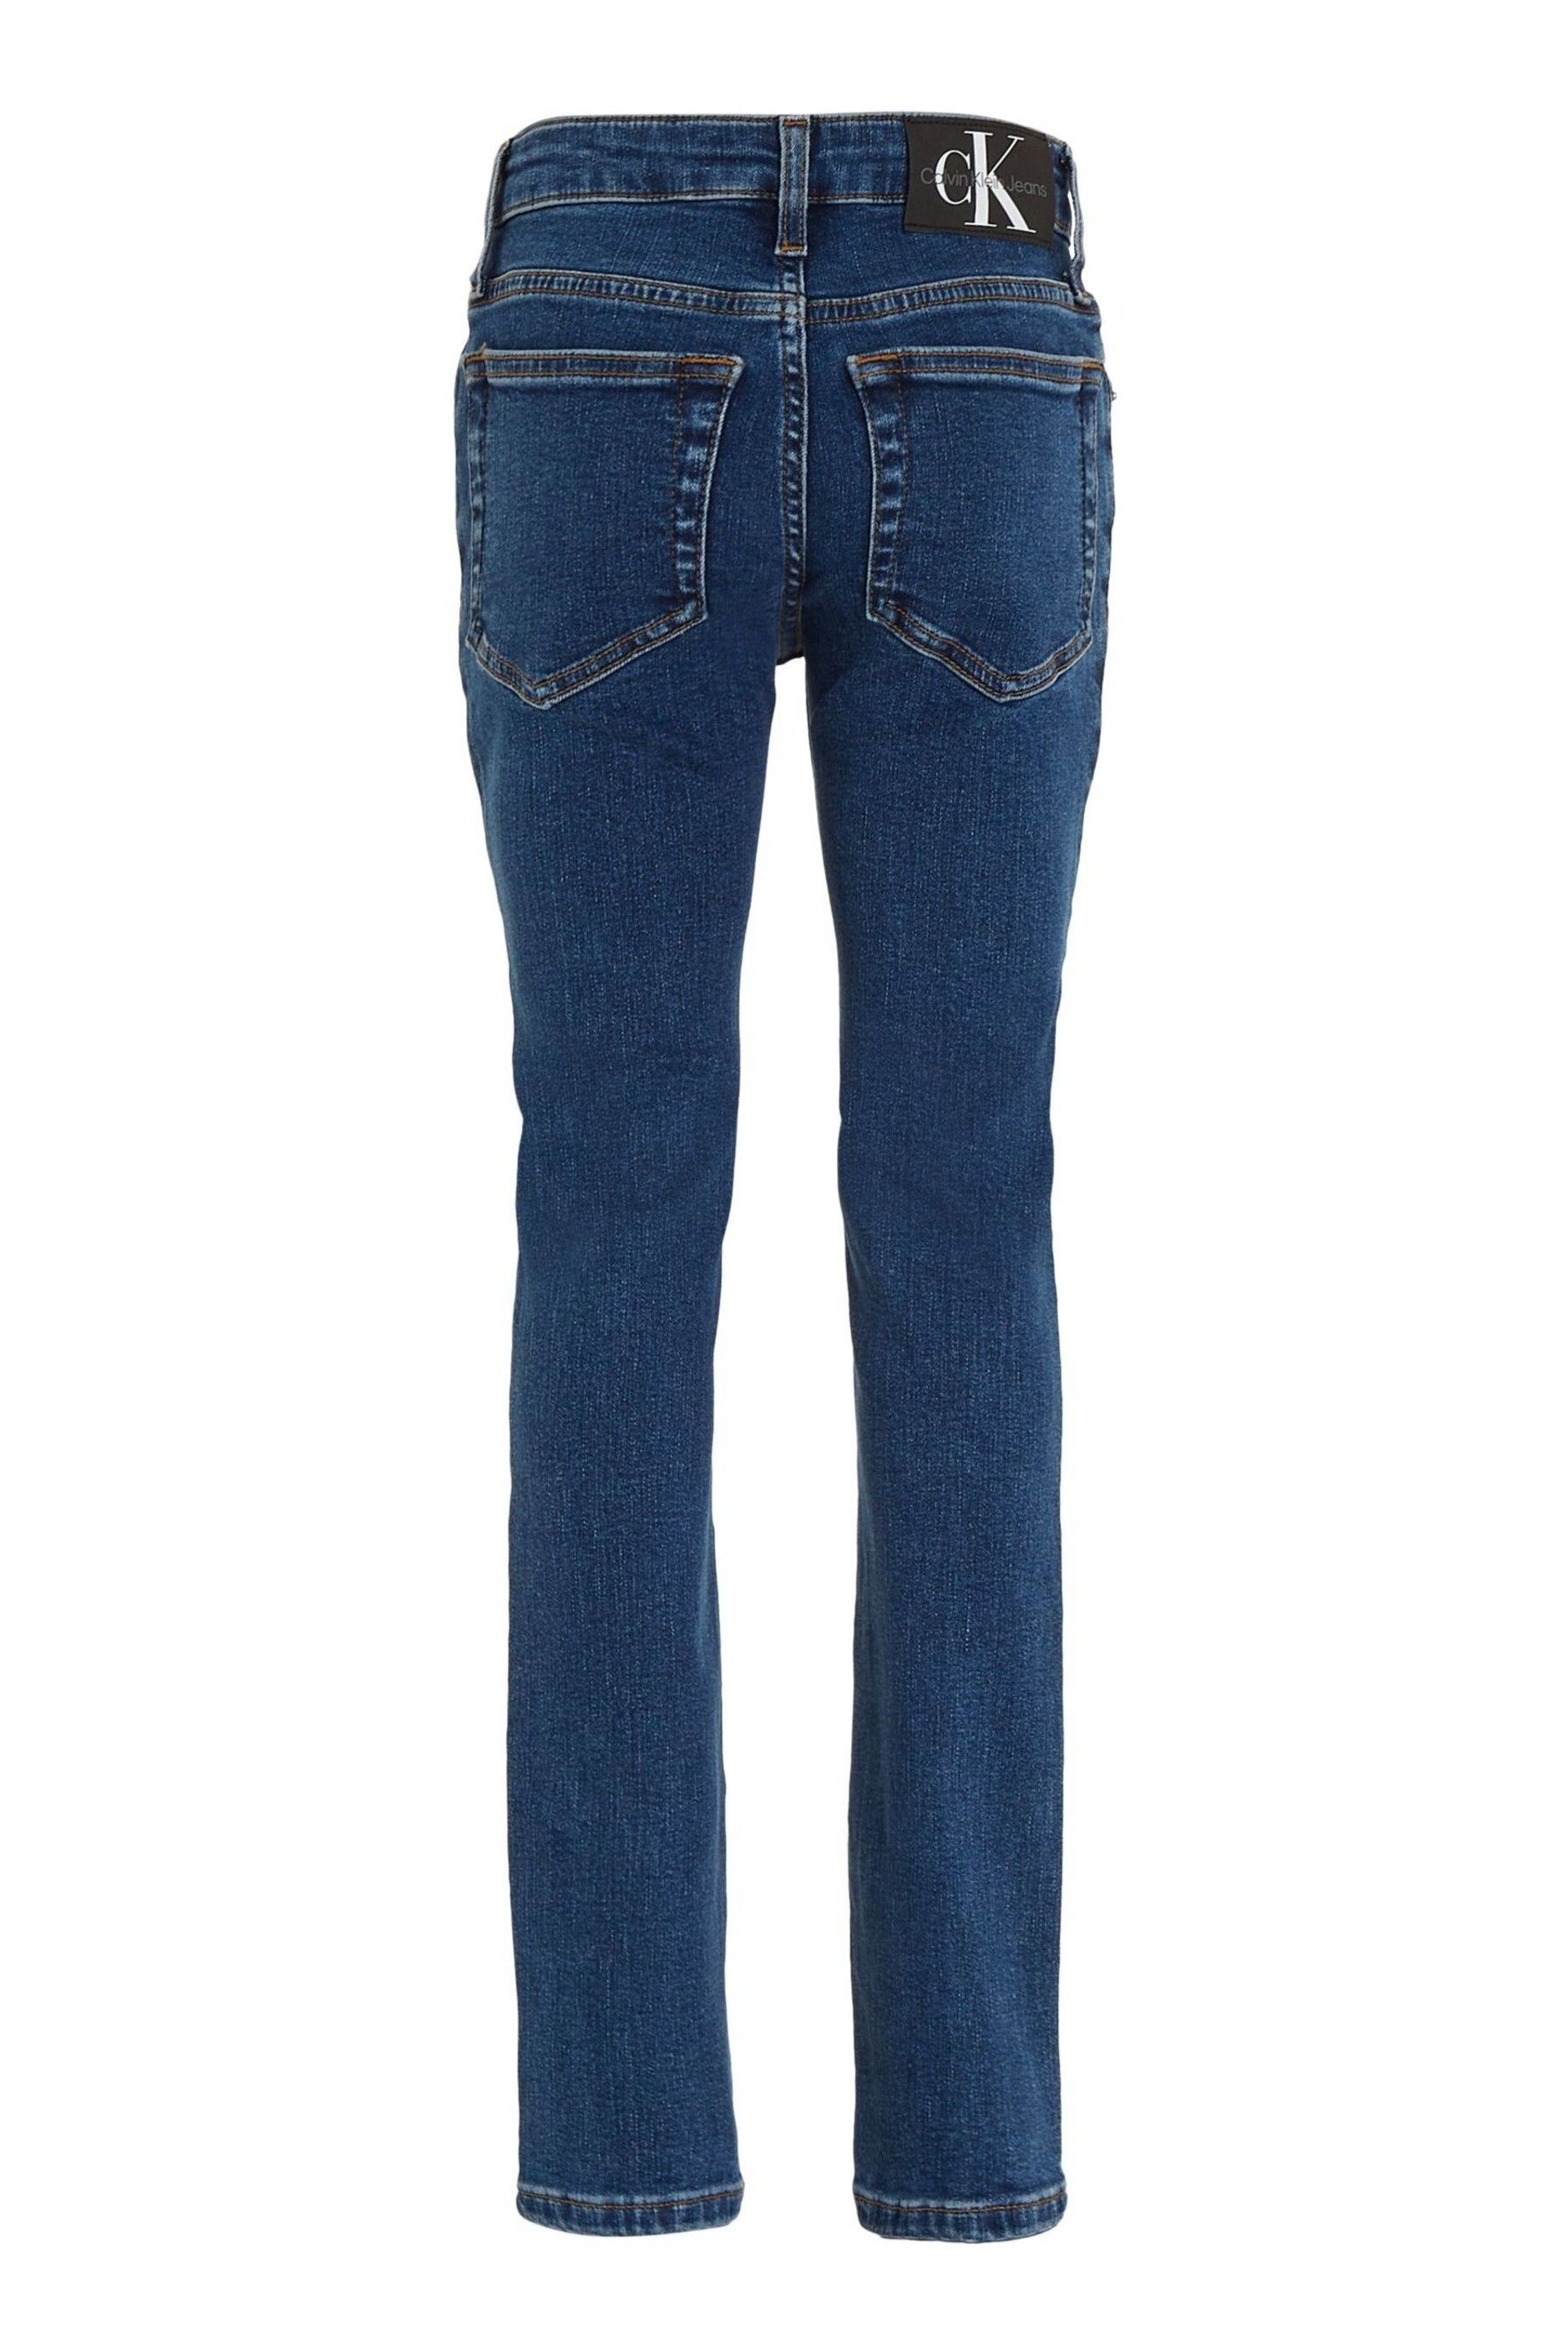 Calvin Klein Jeans Slim Blue Denim Jeans - Image 2 of 5